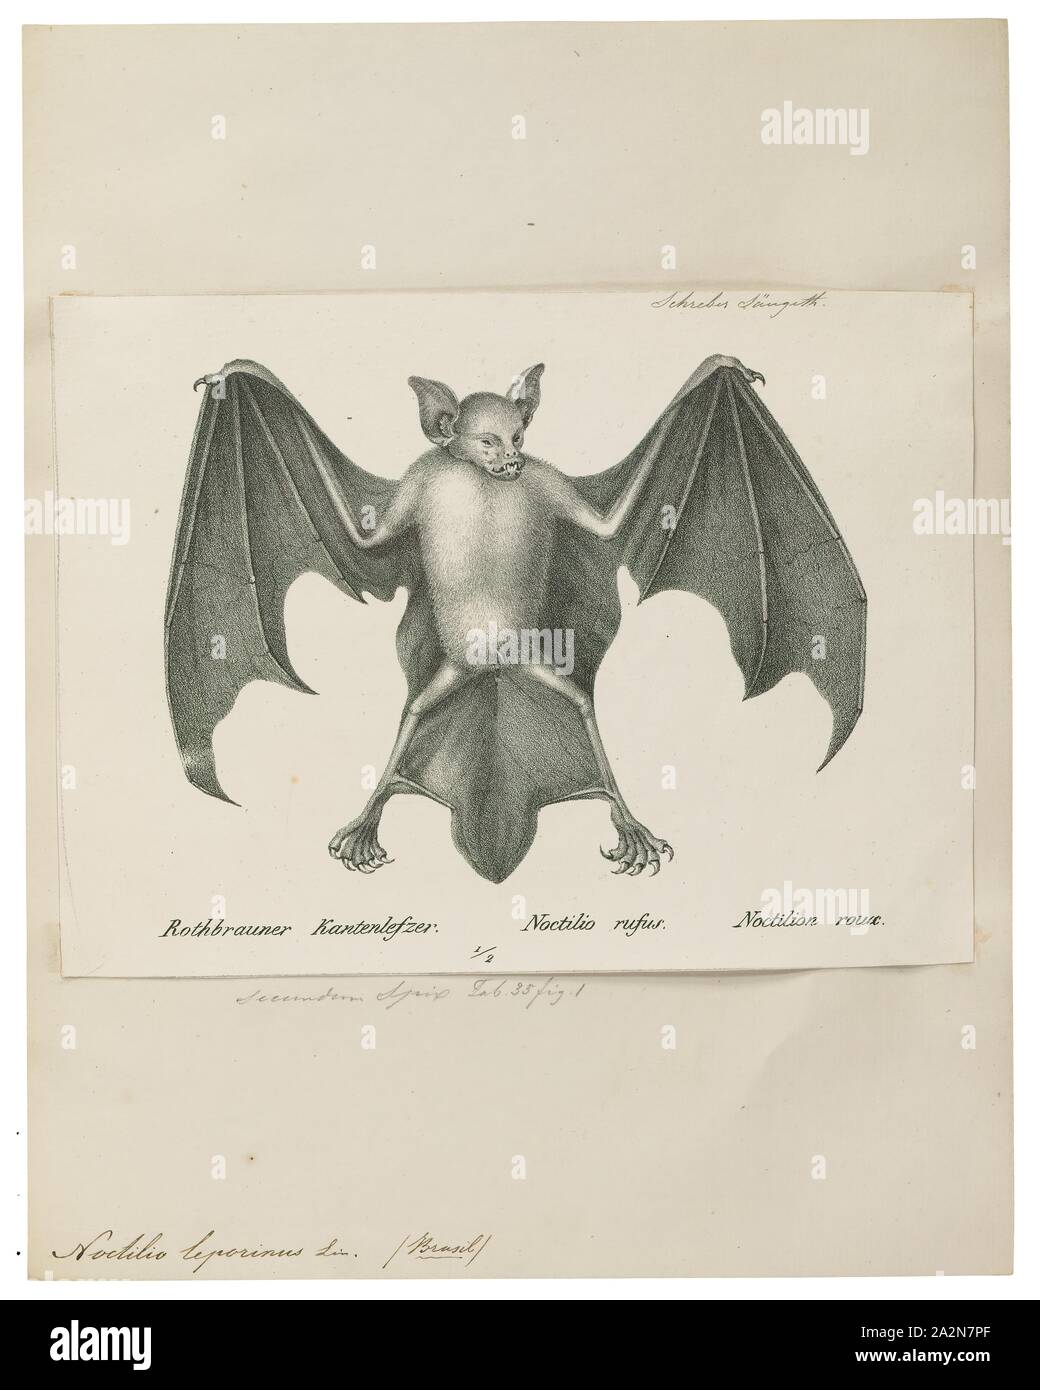 Noctilio leporinus, Print, The greater bulldog bat or fisherman bat  (Noctilio leporinus) is a type of fishing bat native to Latin America  (Spanish: Murciélago pescador). The bat uses echolocation to detect water